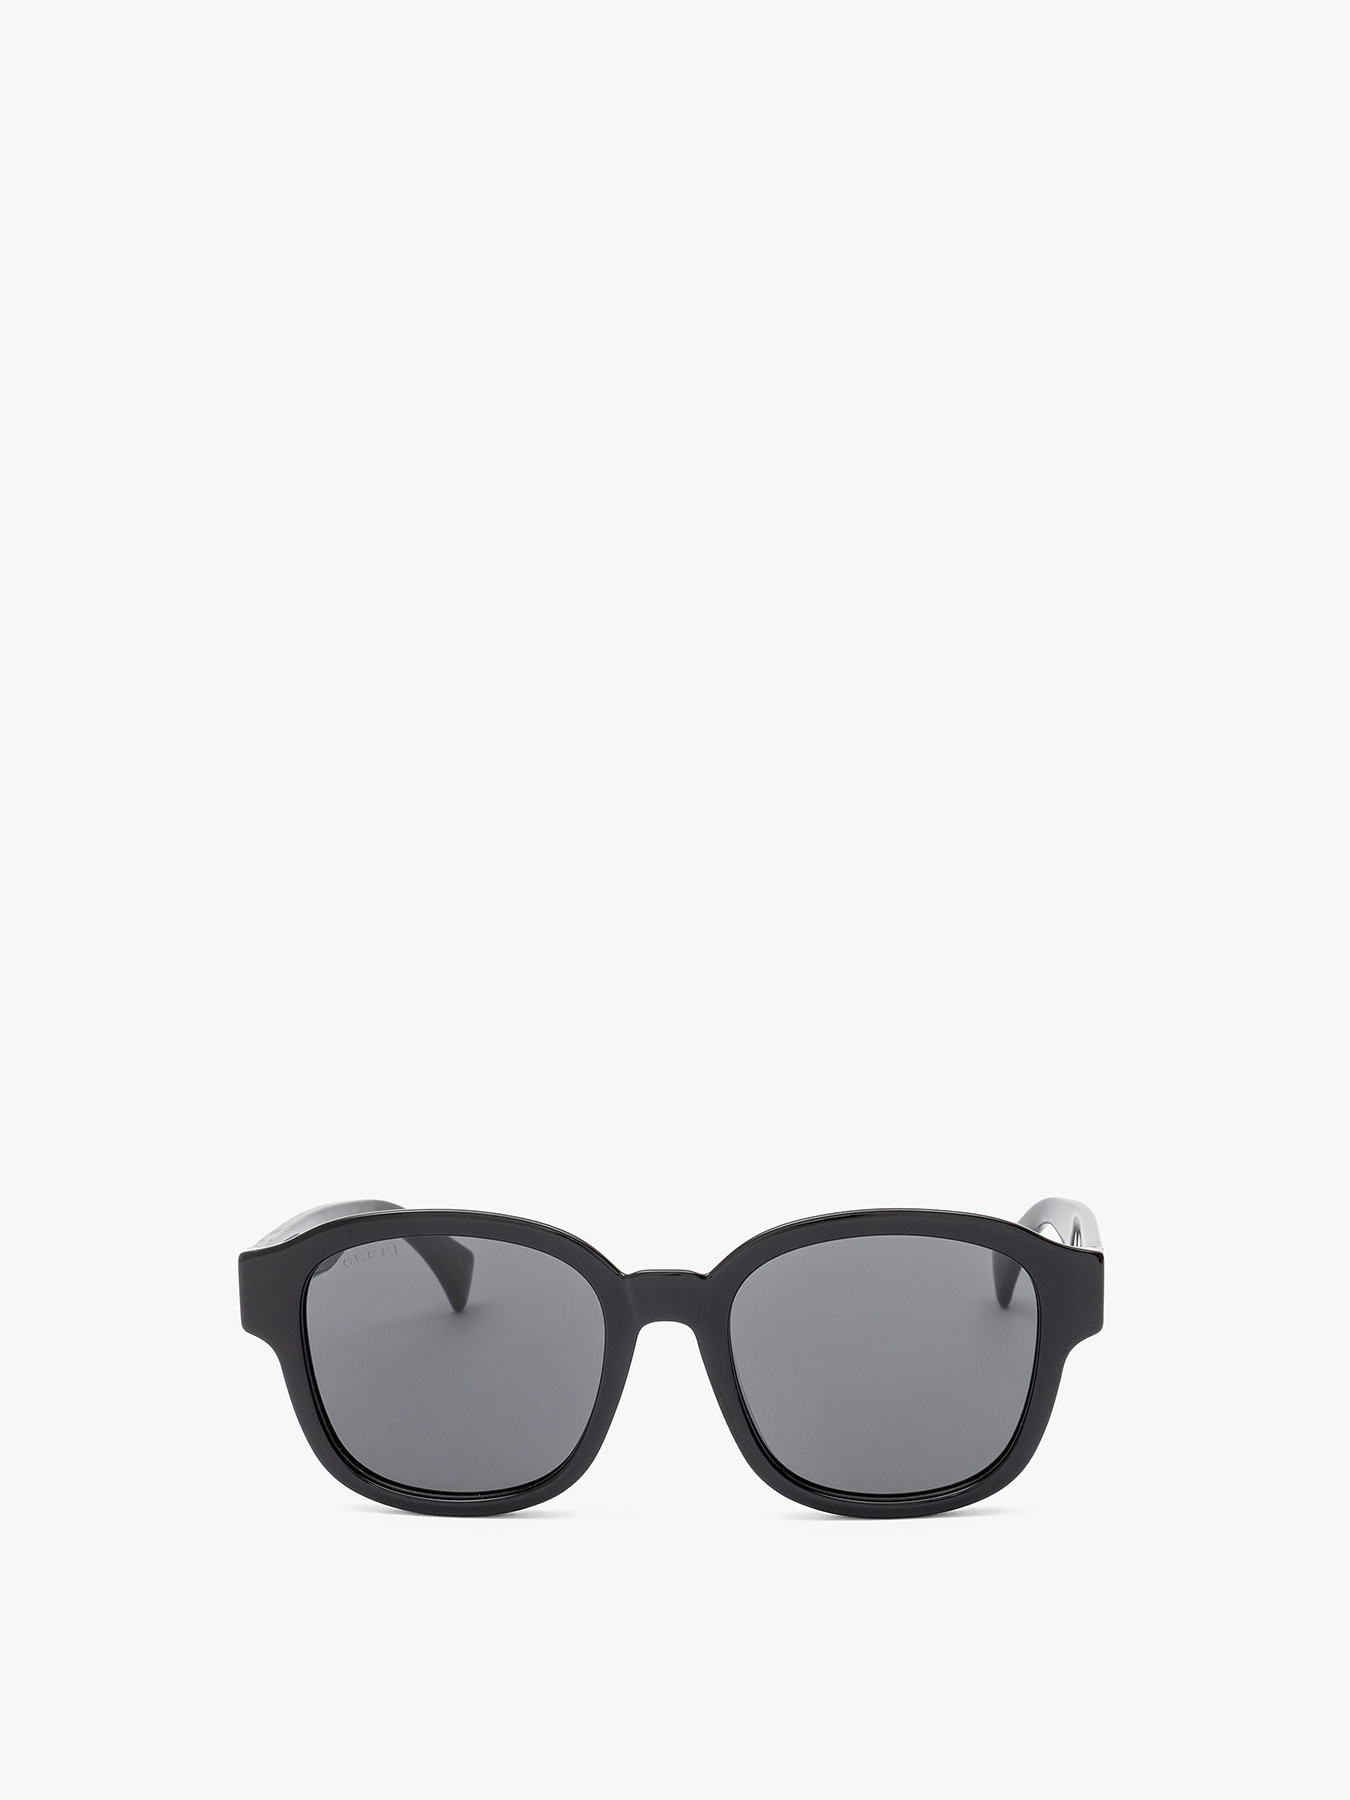 Gucci Logo Round Injection Sunglasses Black-black-grey